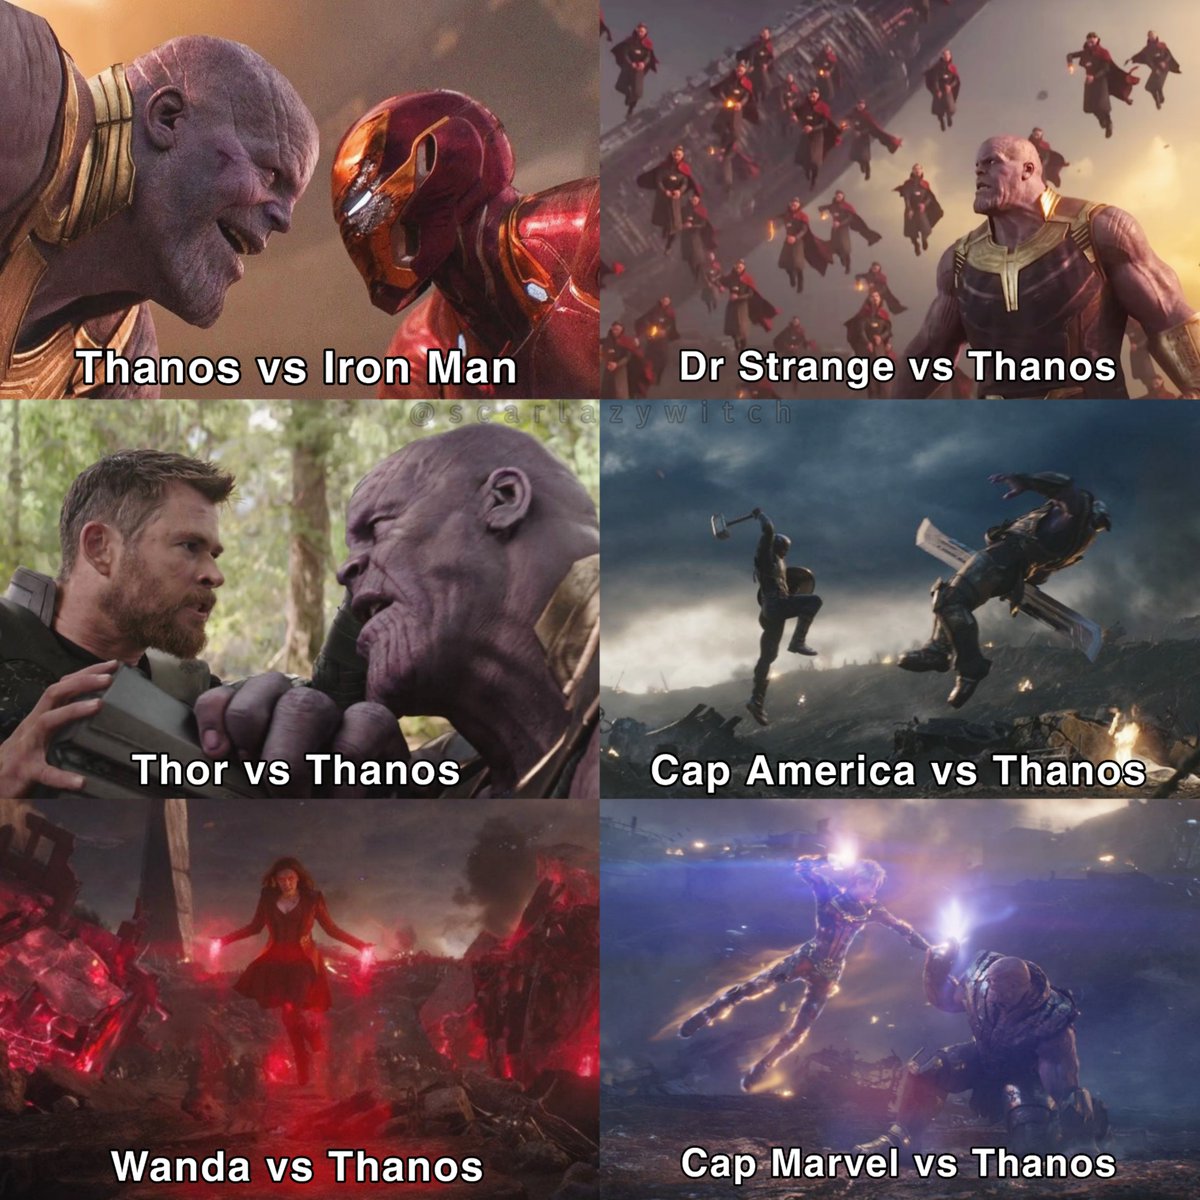 Which Thanos fight scene was the best?